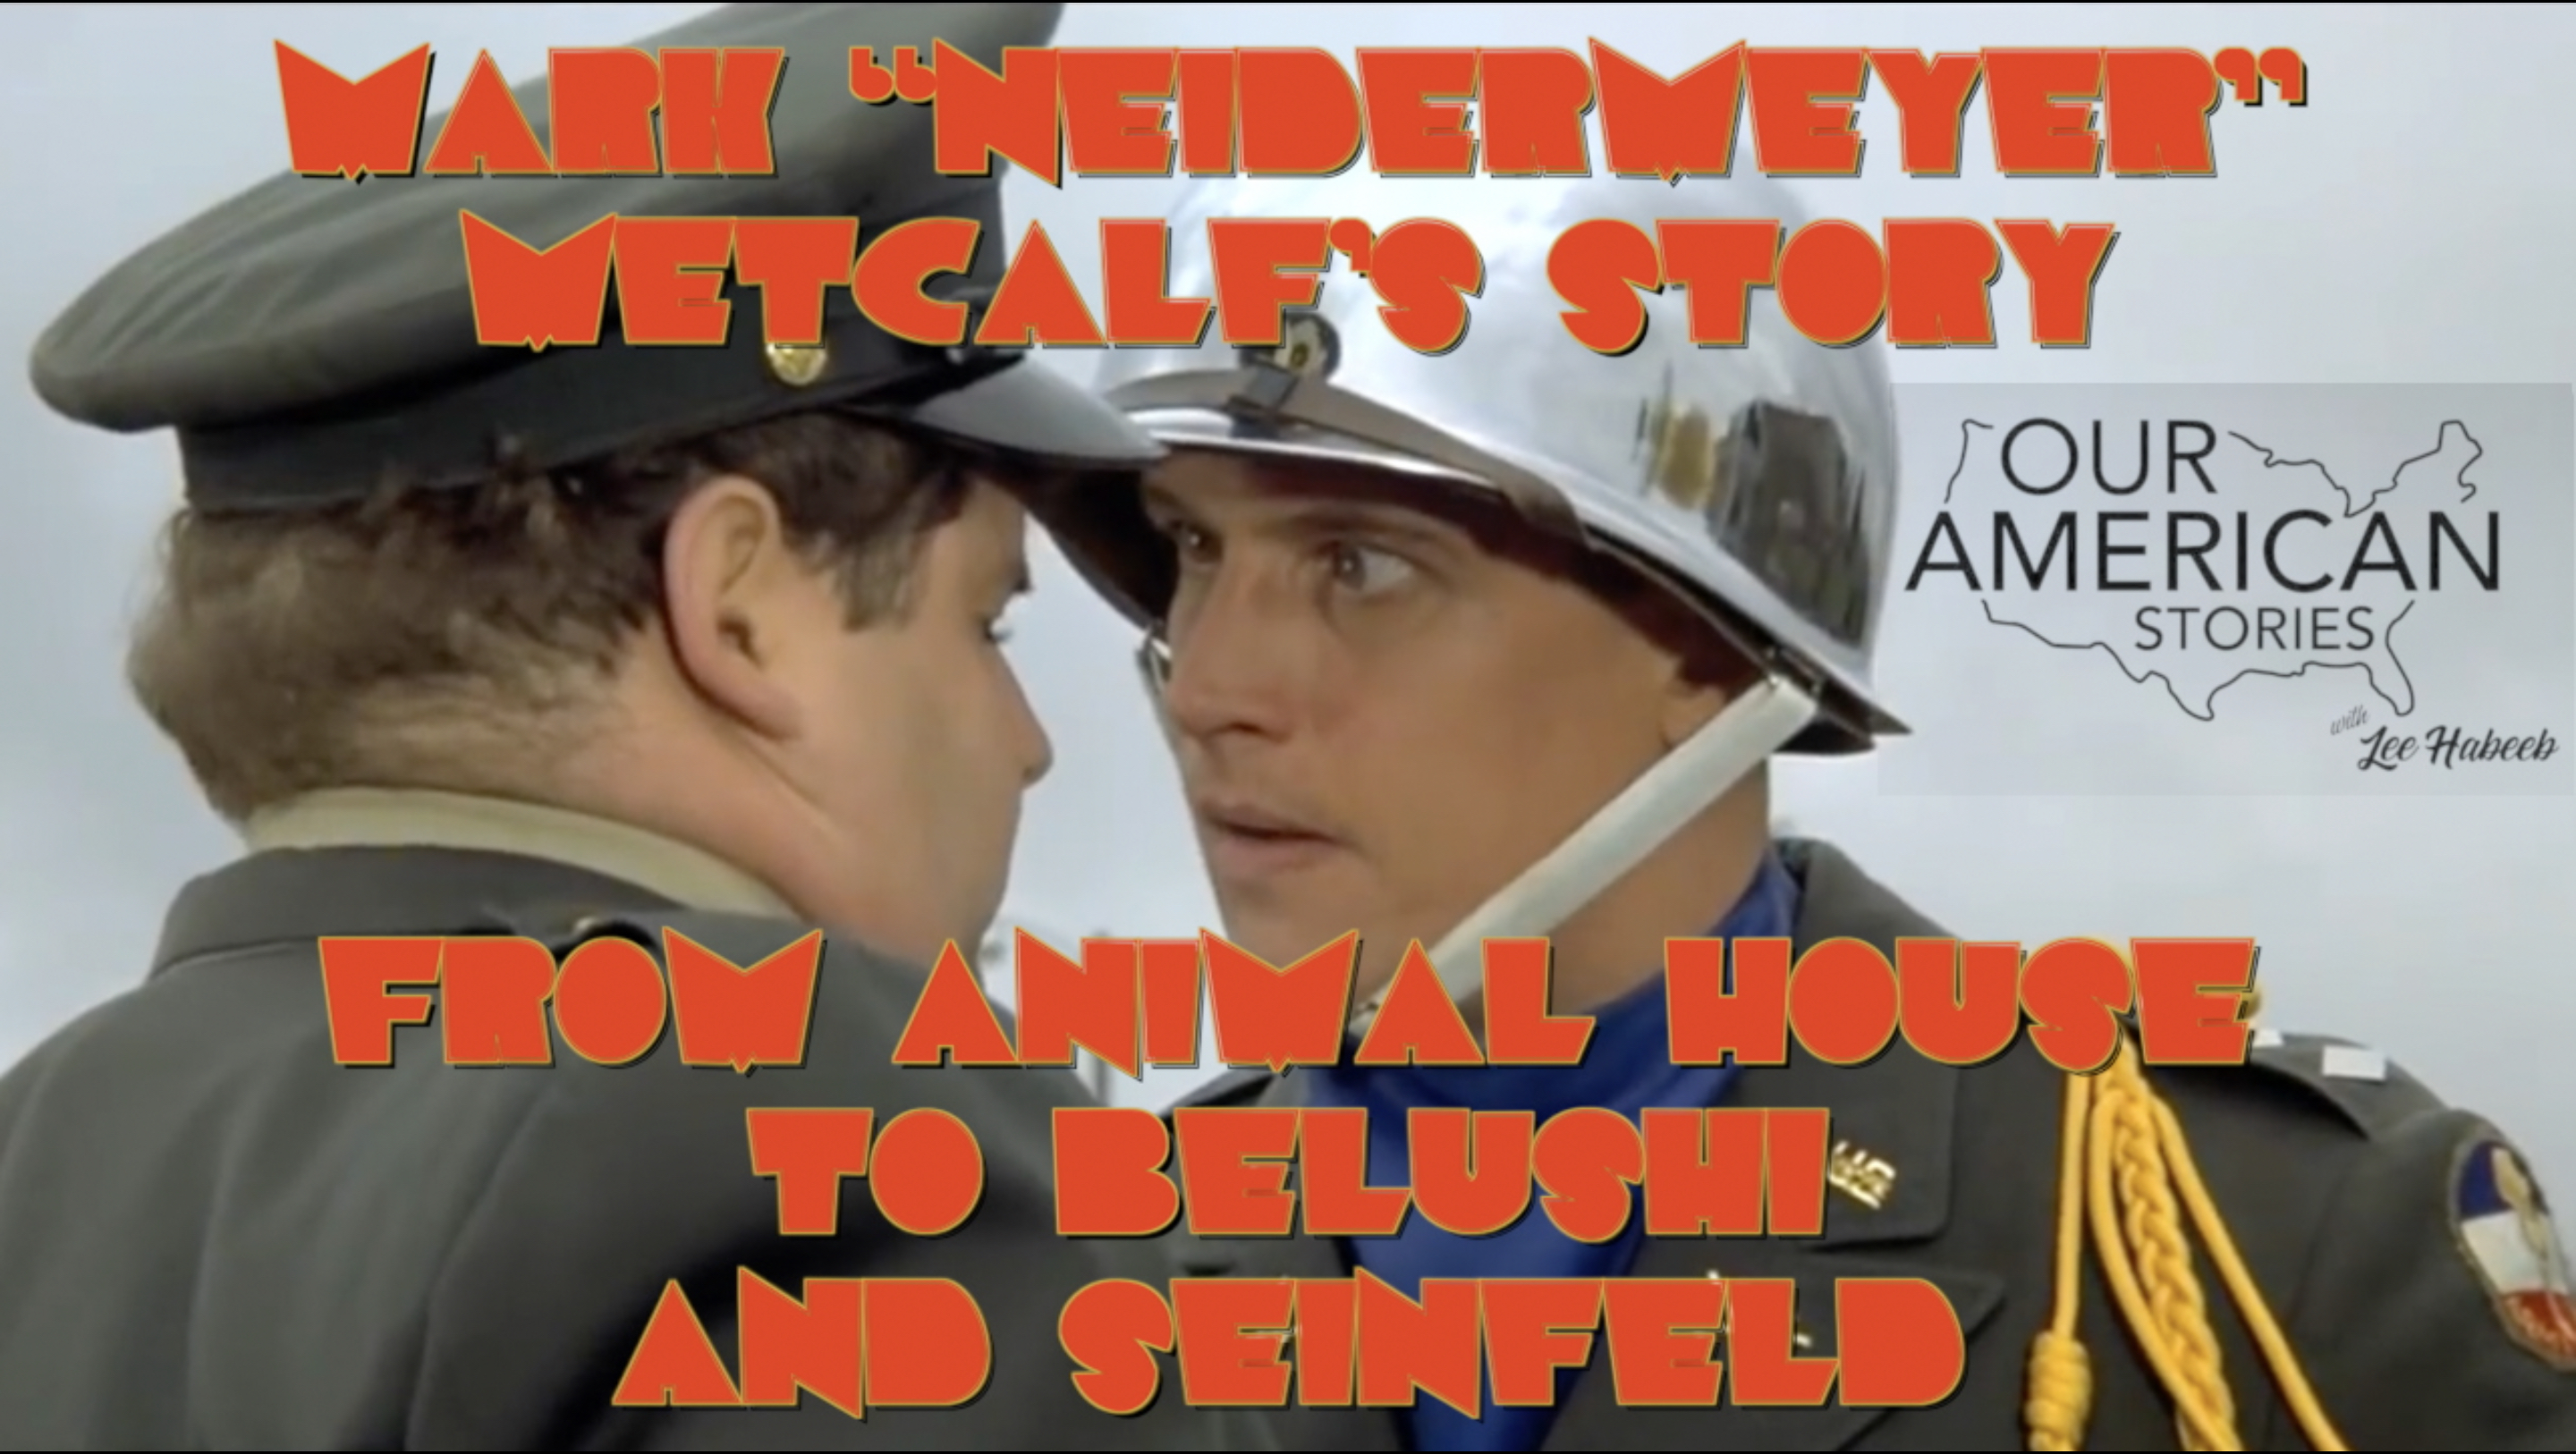 From Animal House to Belushi to Seinfeld: Mark “Neidermeyer” Metcalf’s Story